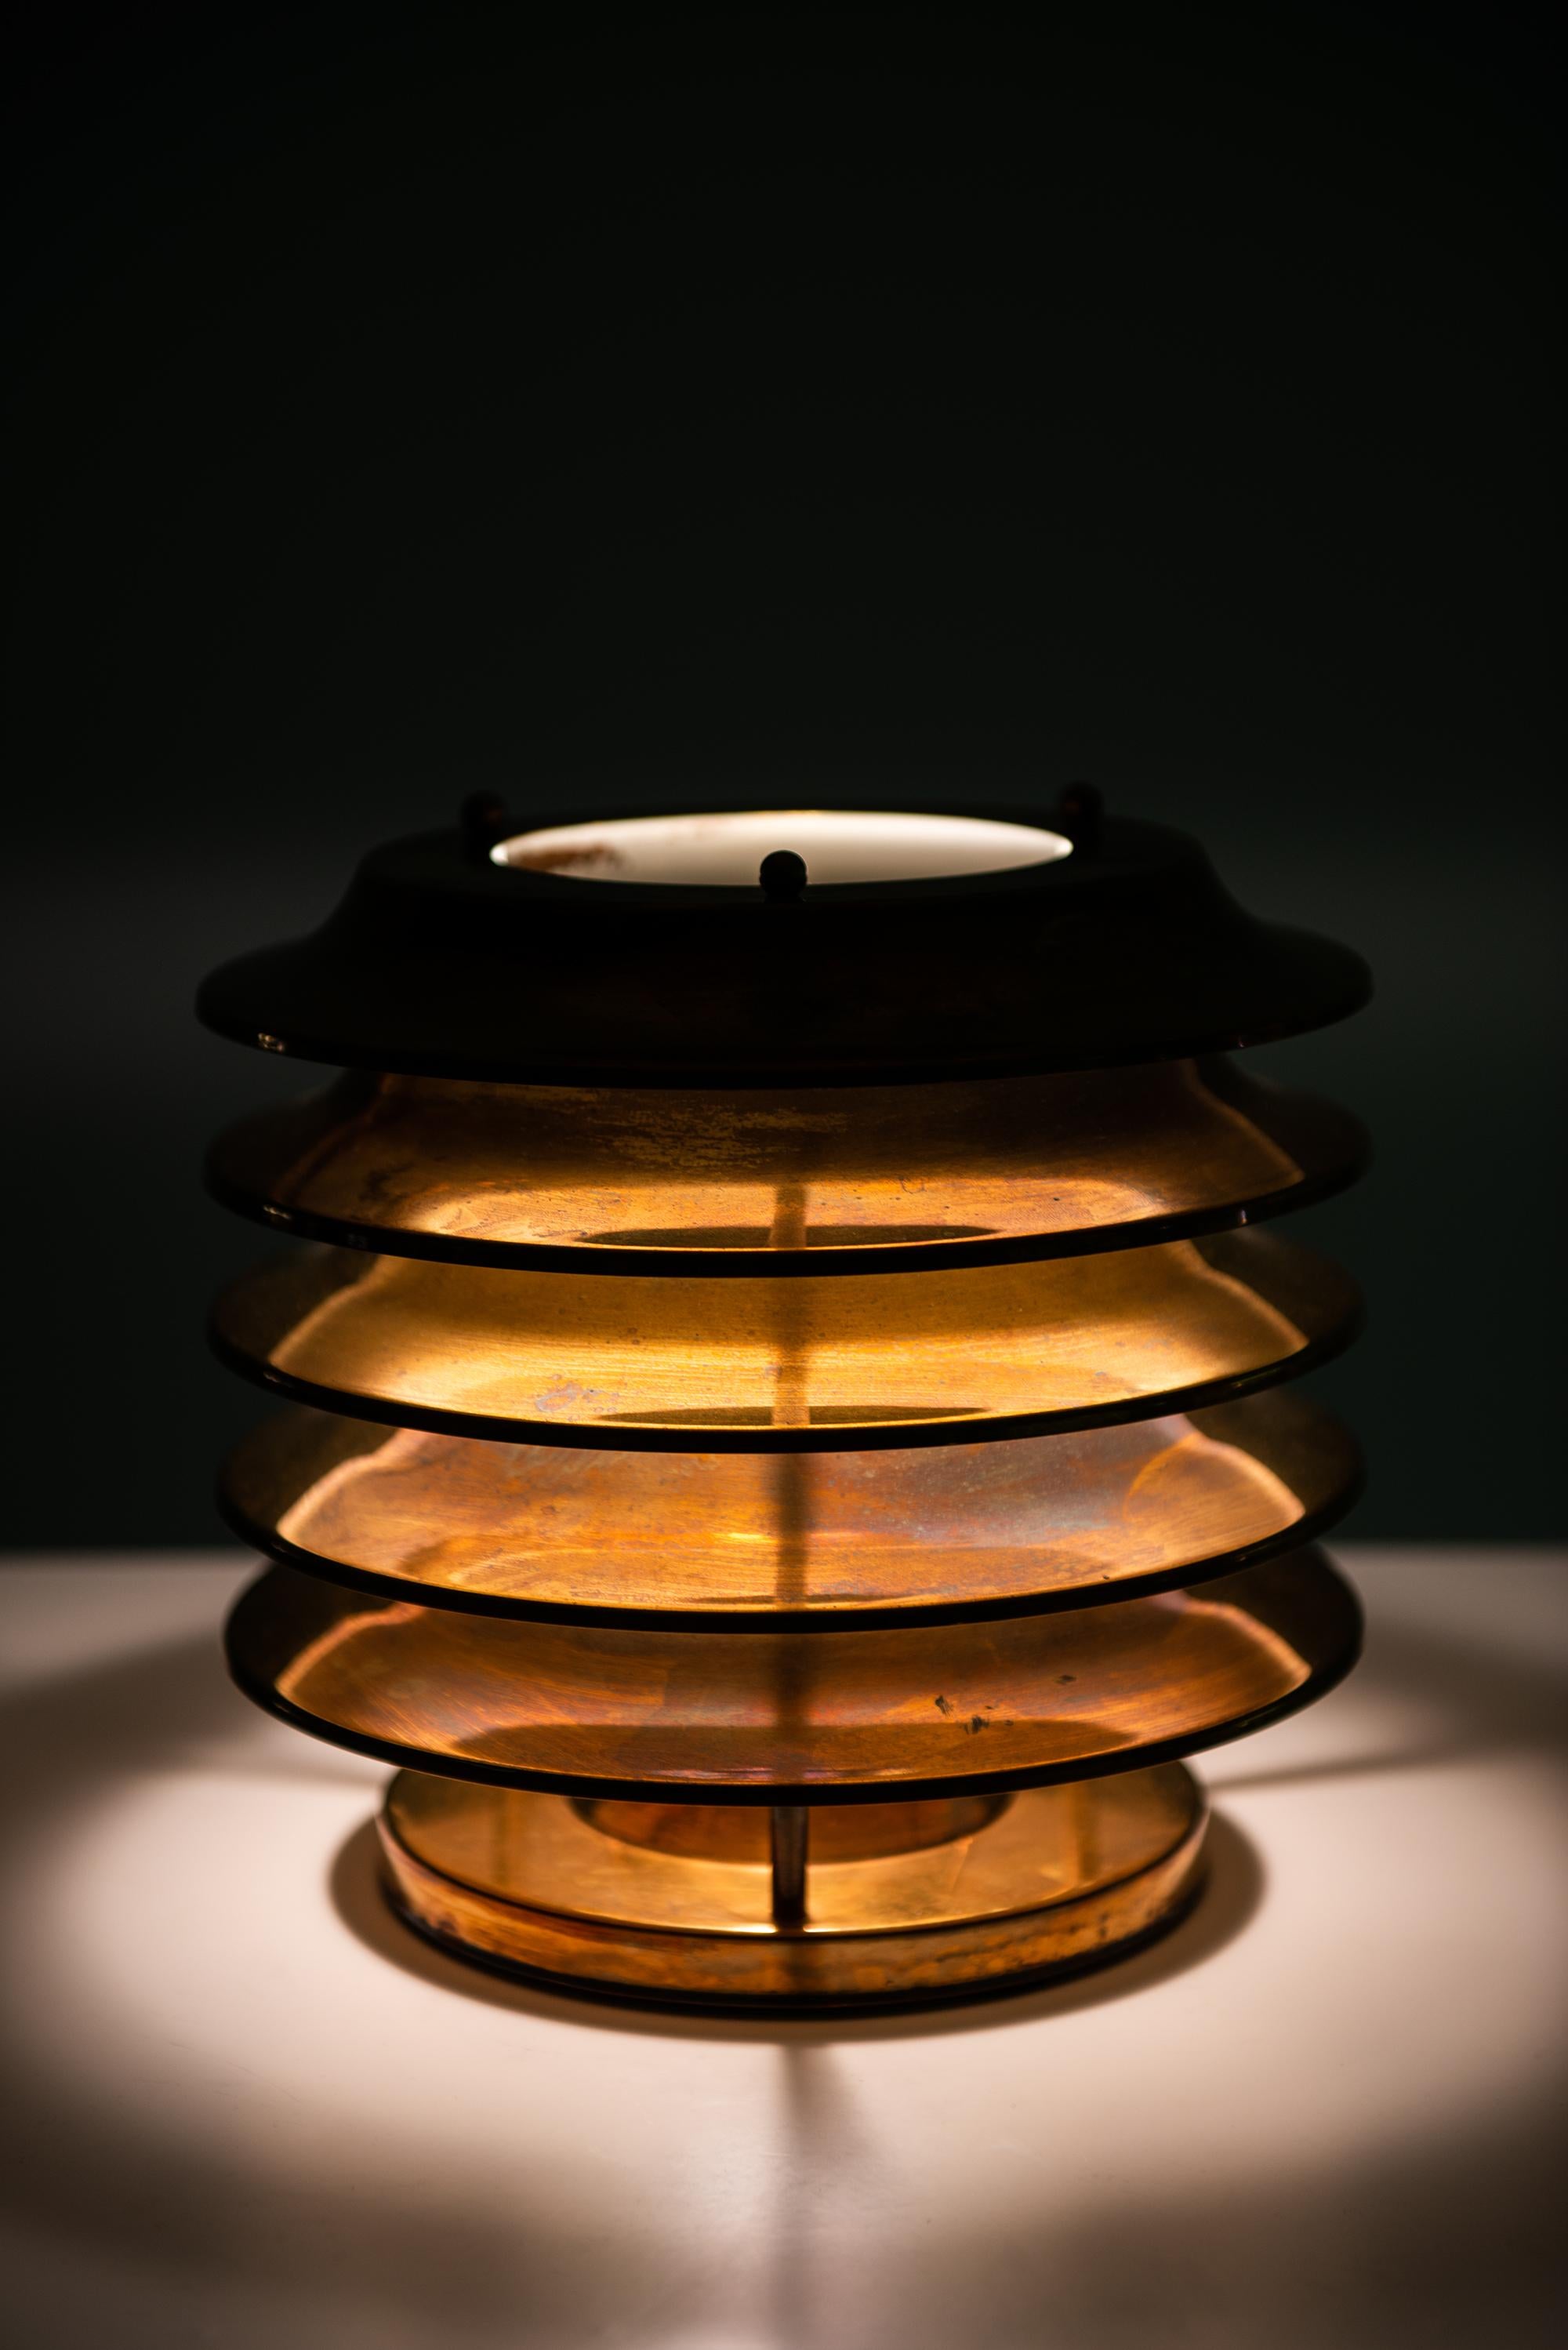 Brass Kari Ruokonen Table Lamp Produced by Lynx in Finland